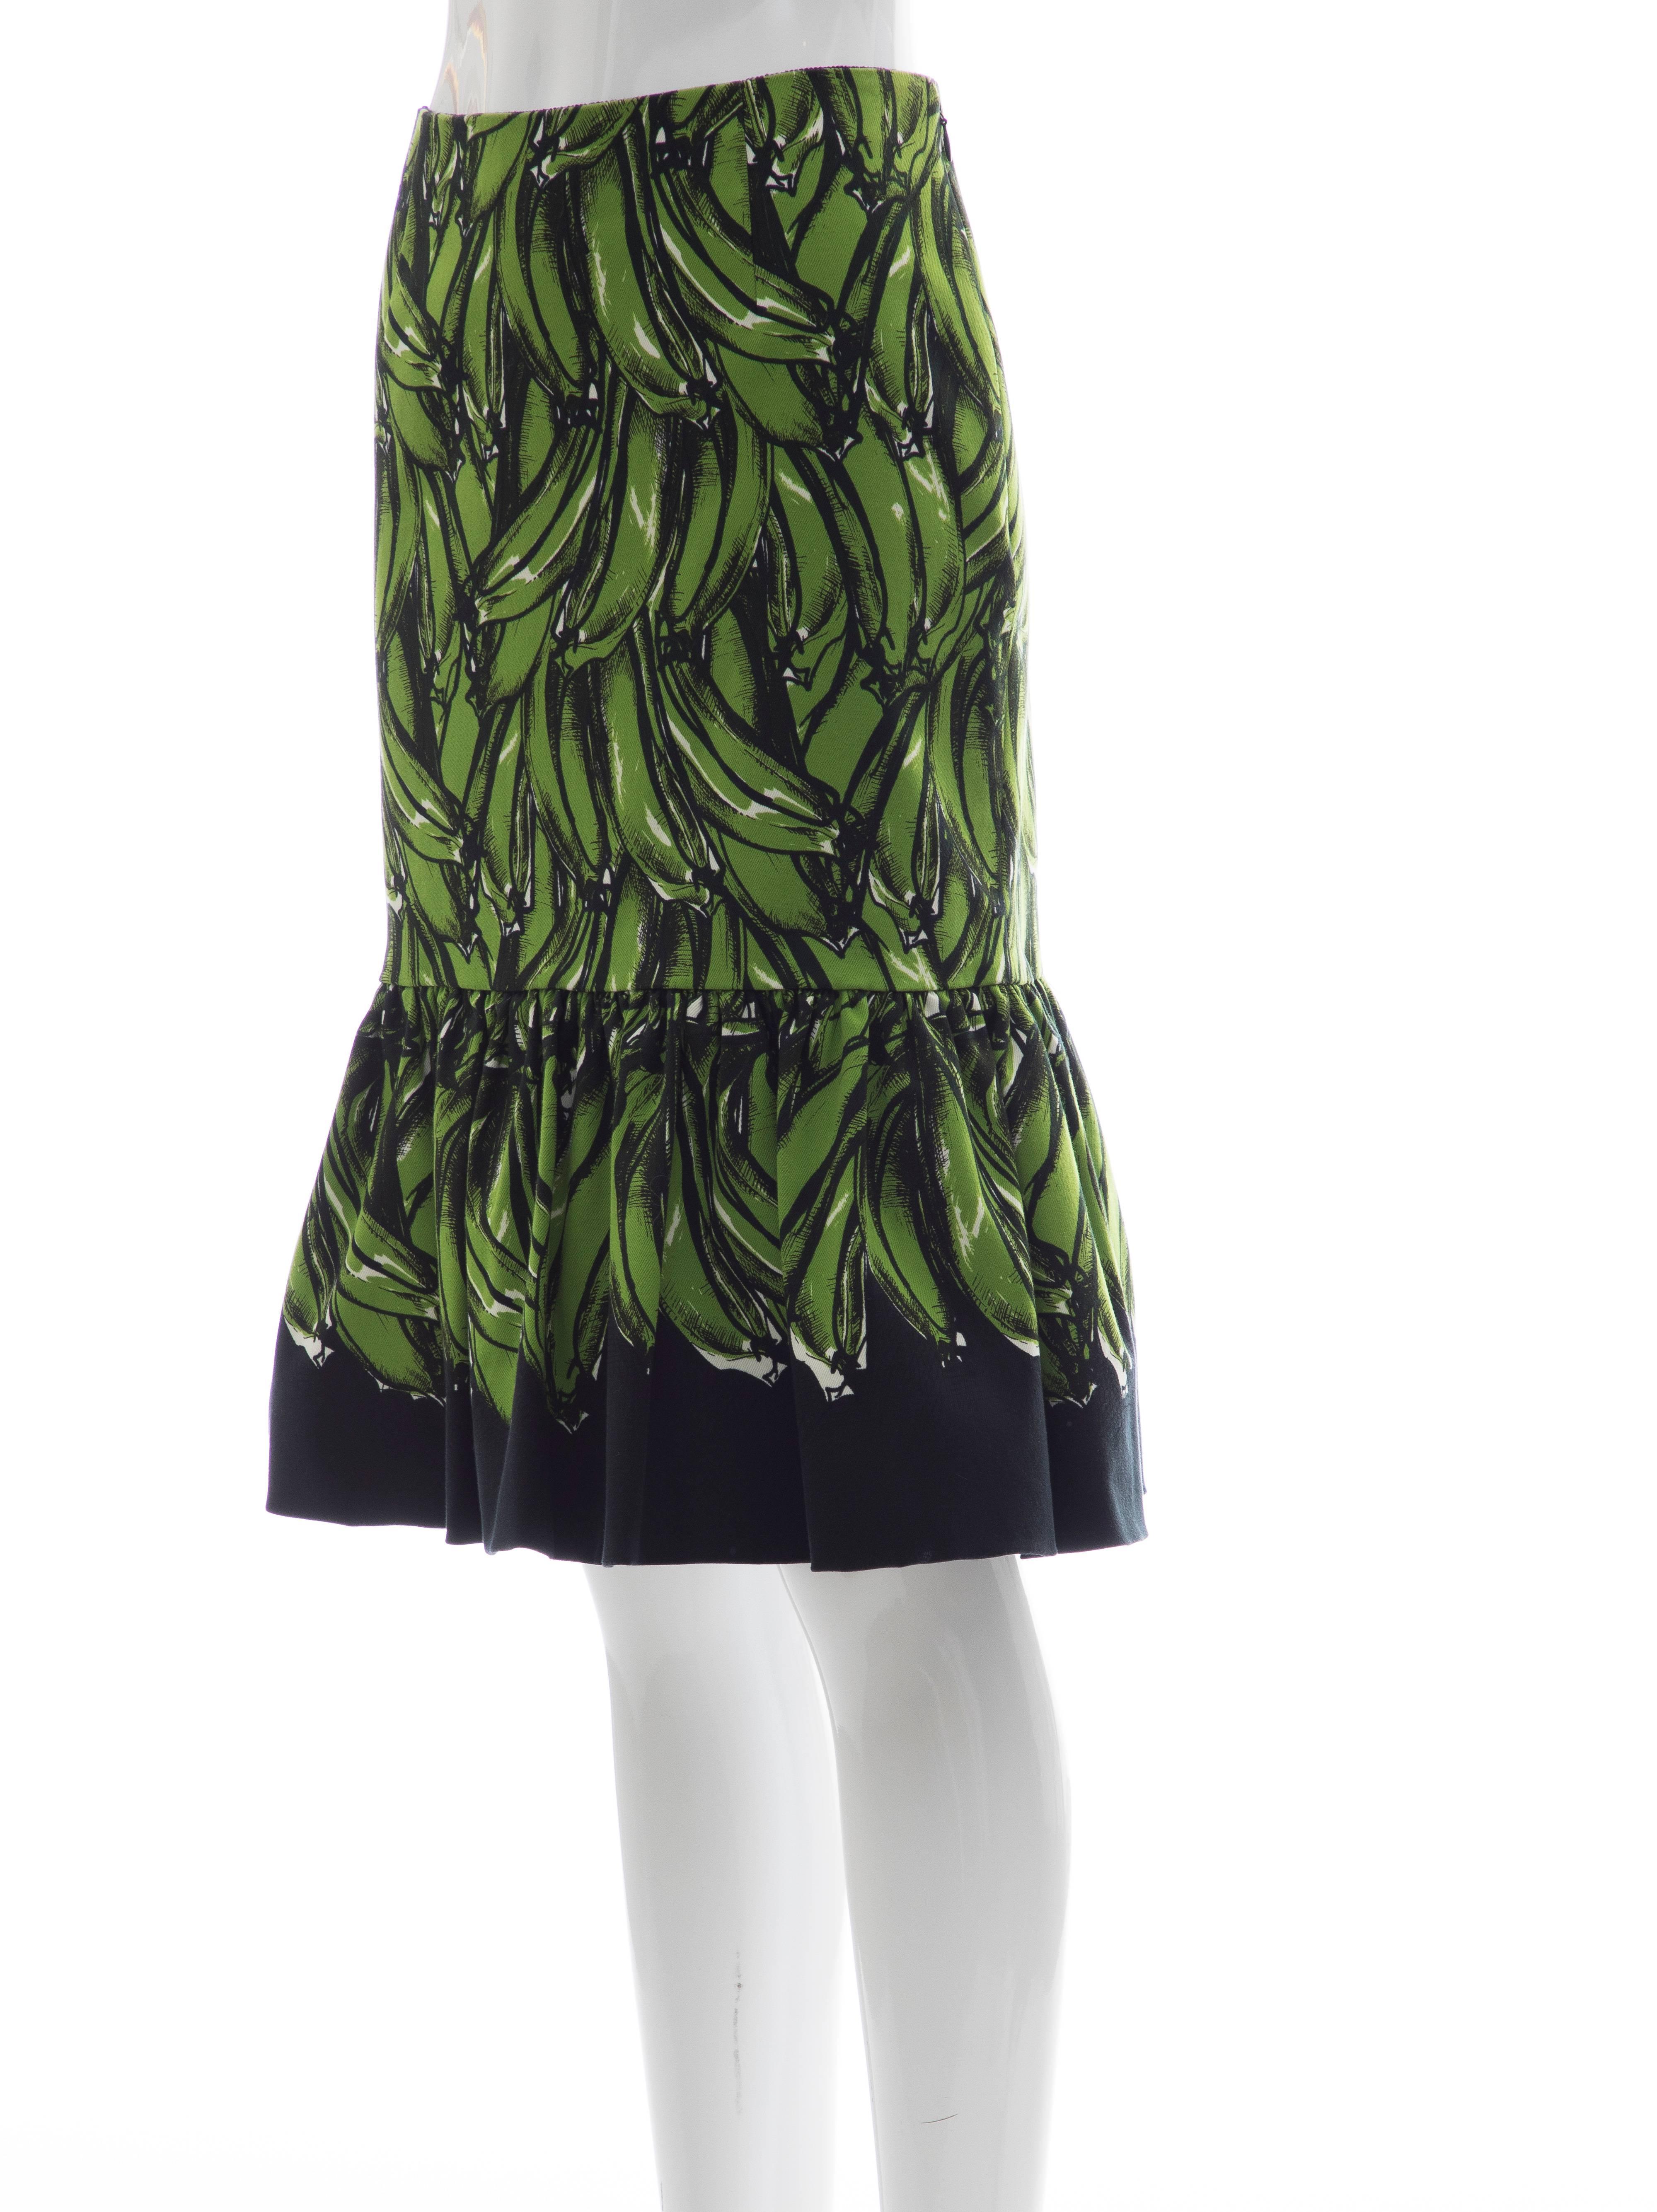 Prada Black Cotton With Green Plantains Print Skirt, Spring - Summer 2011 3